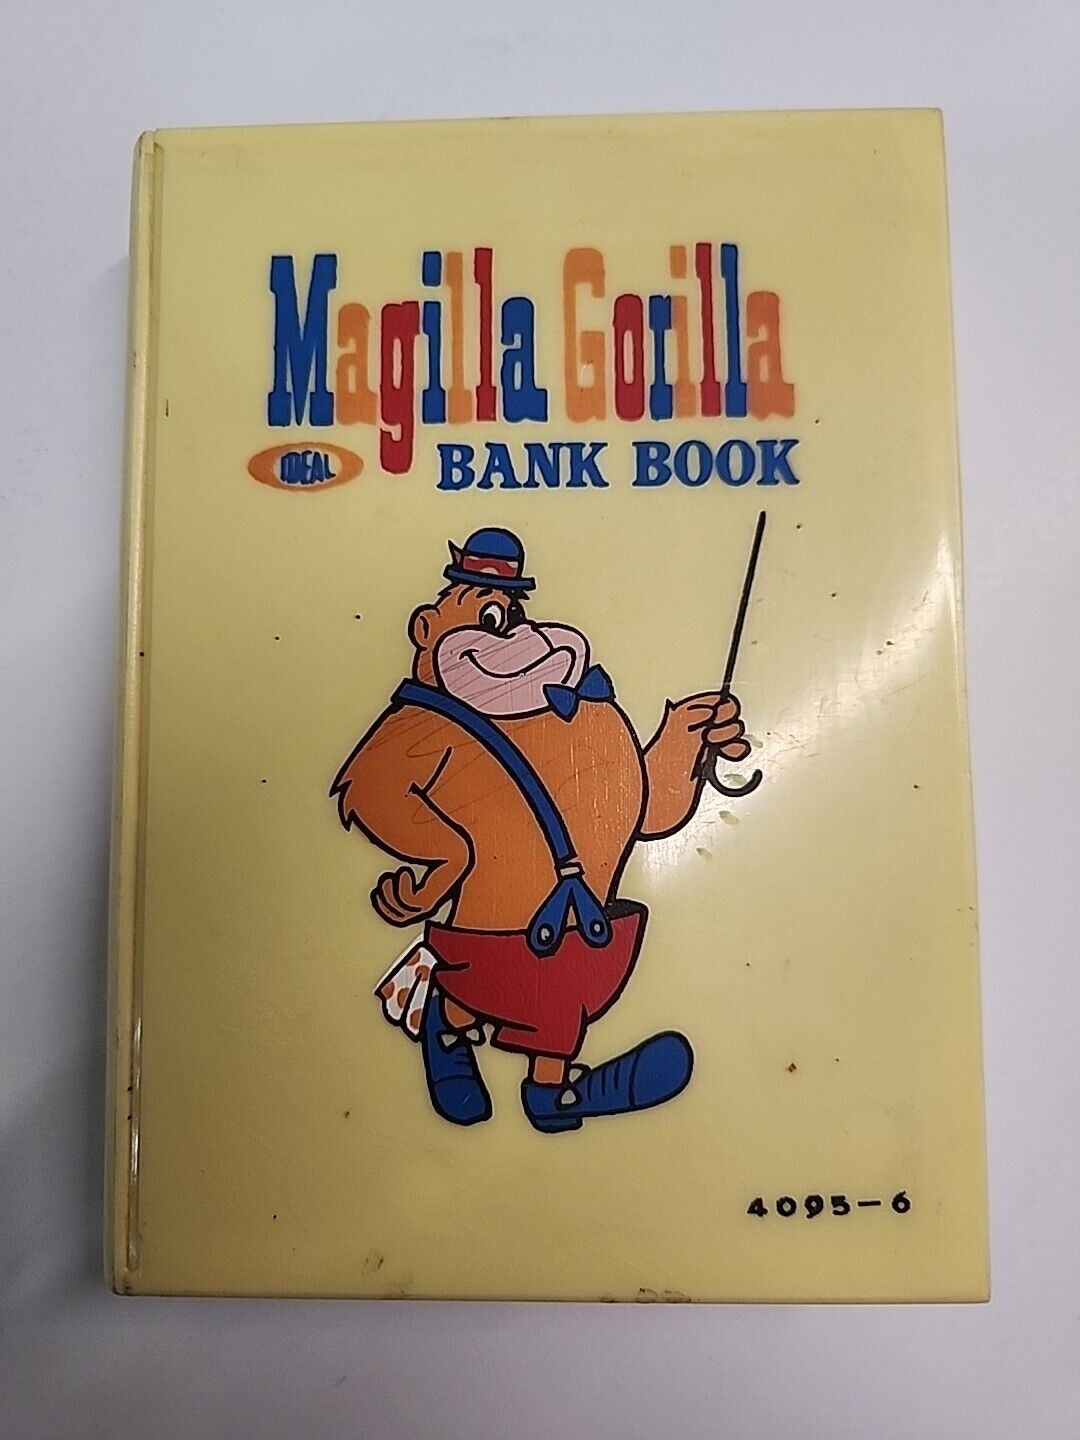 IDEAL MAGILLA GORILLA BANK BOOK  HANNA BARBERA 1964 HONG KONG